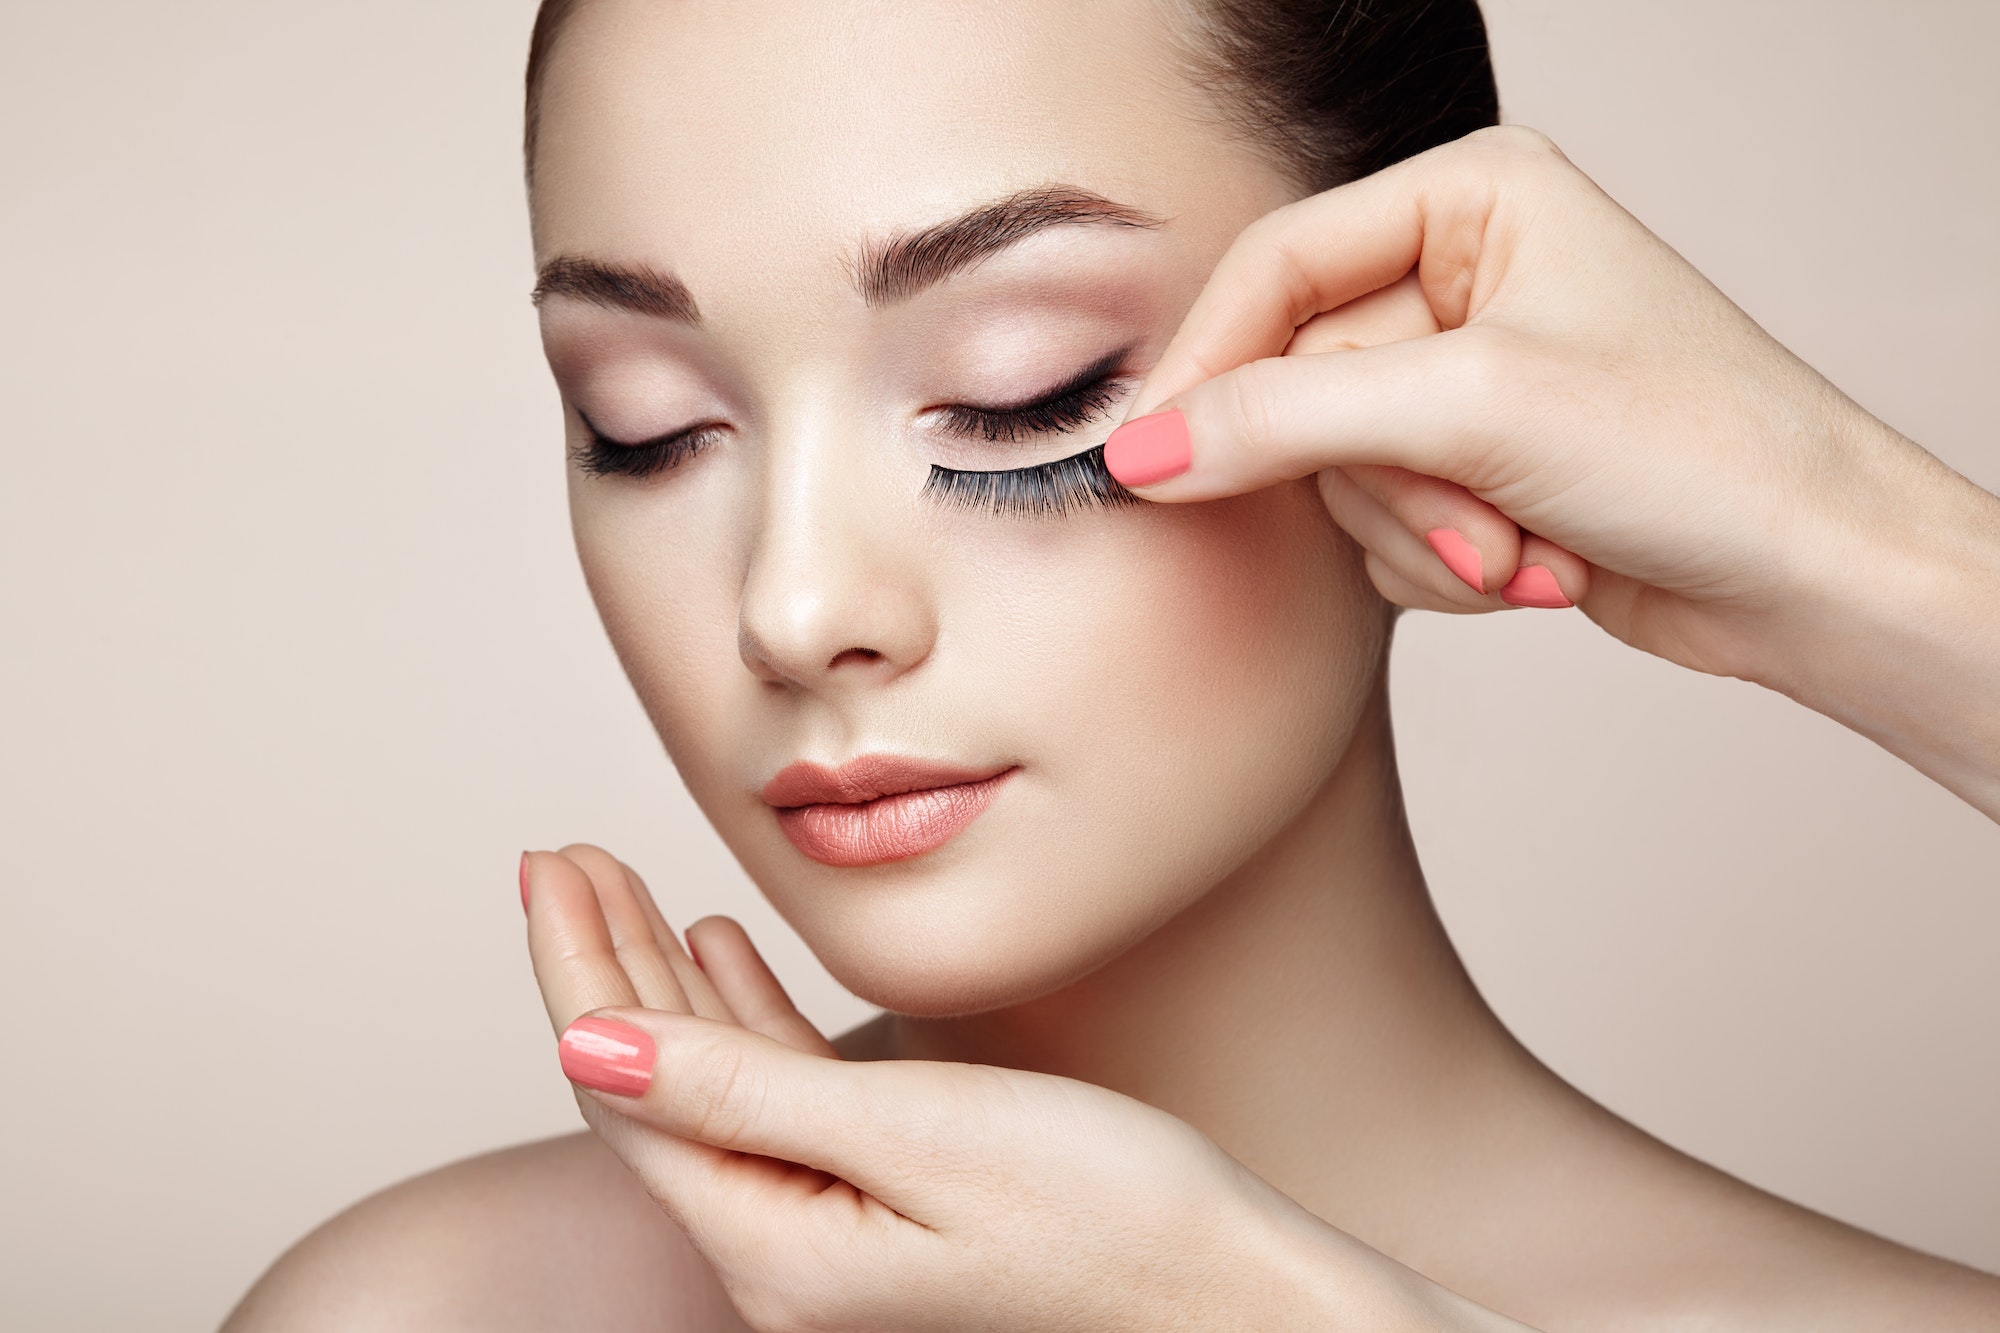 Makeup artist glues eyelashes